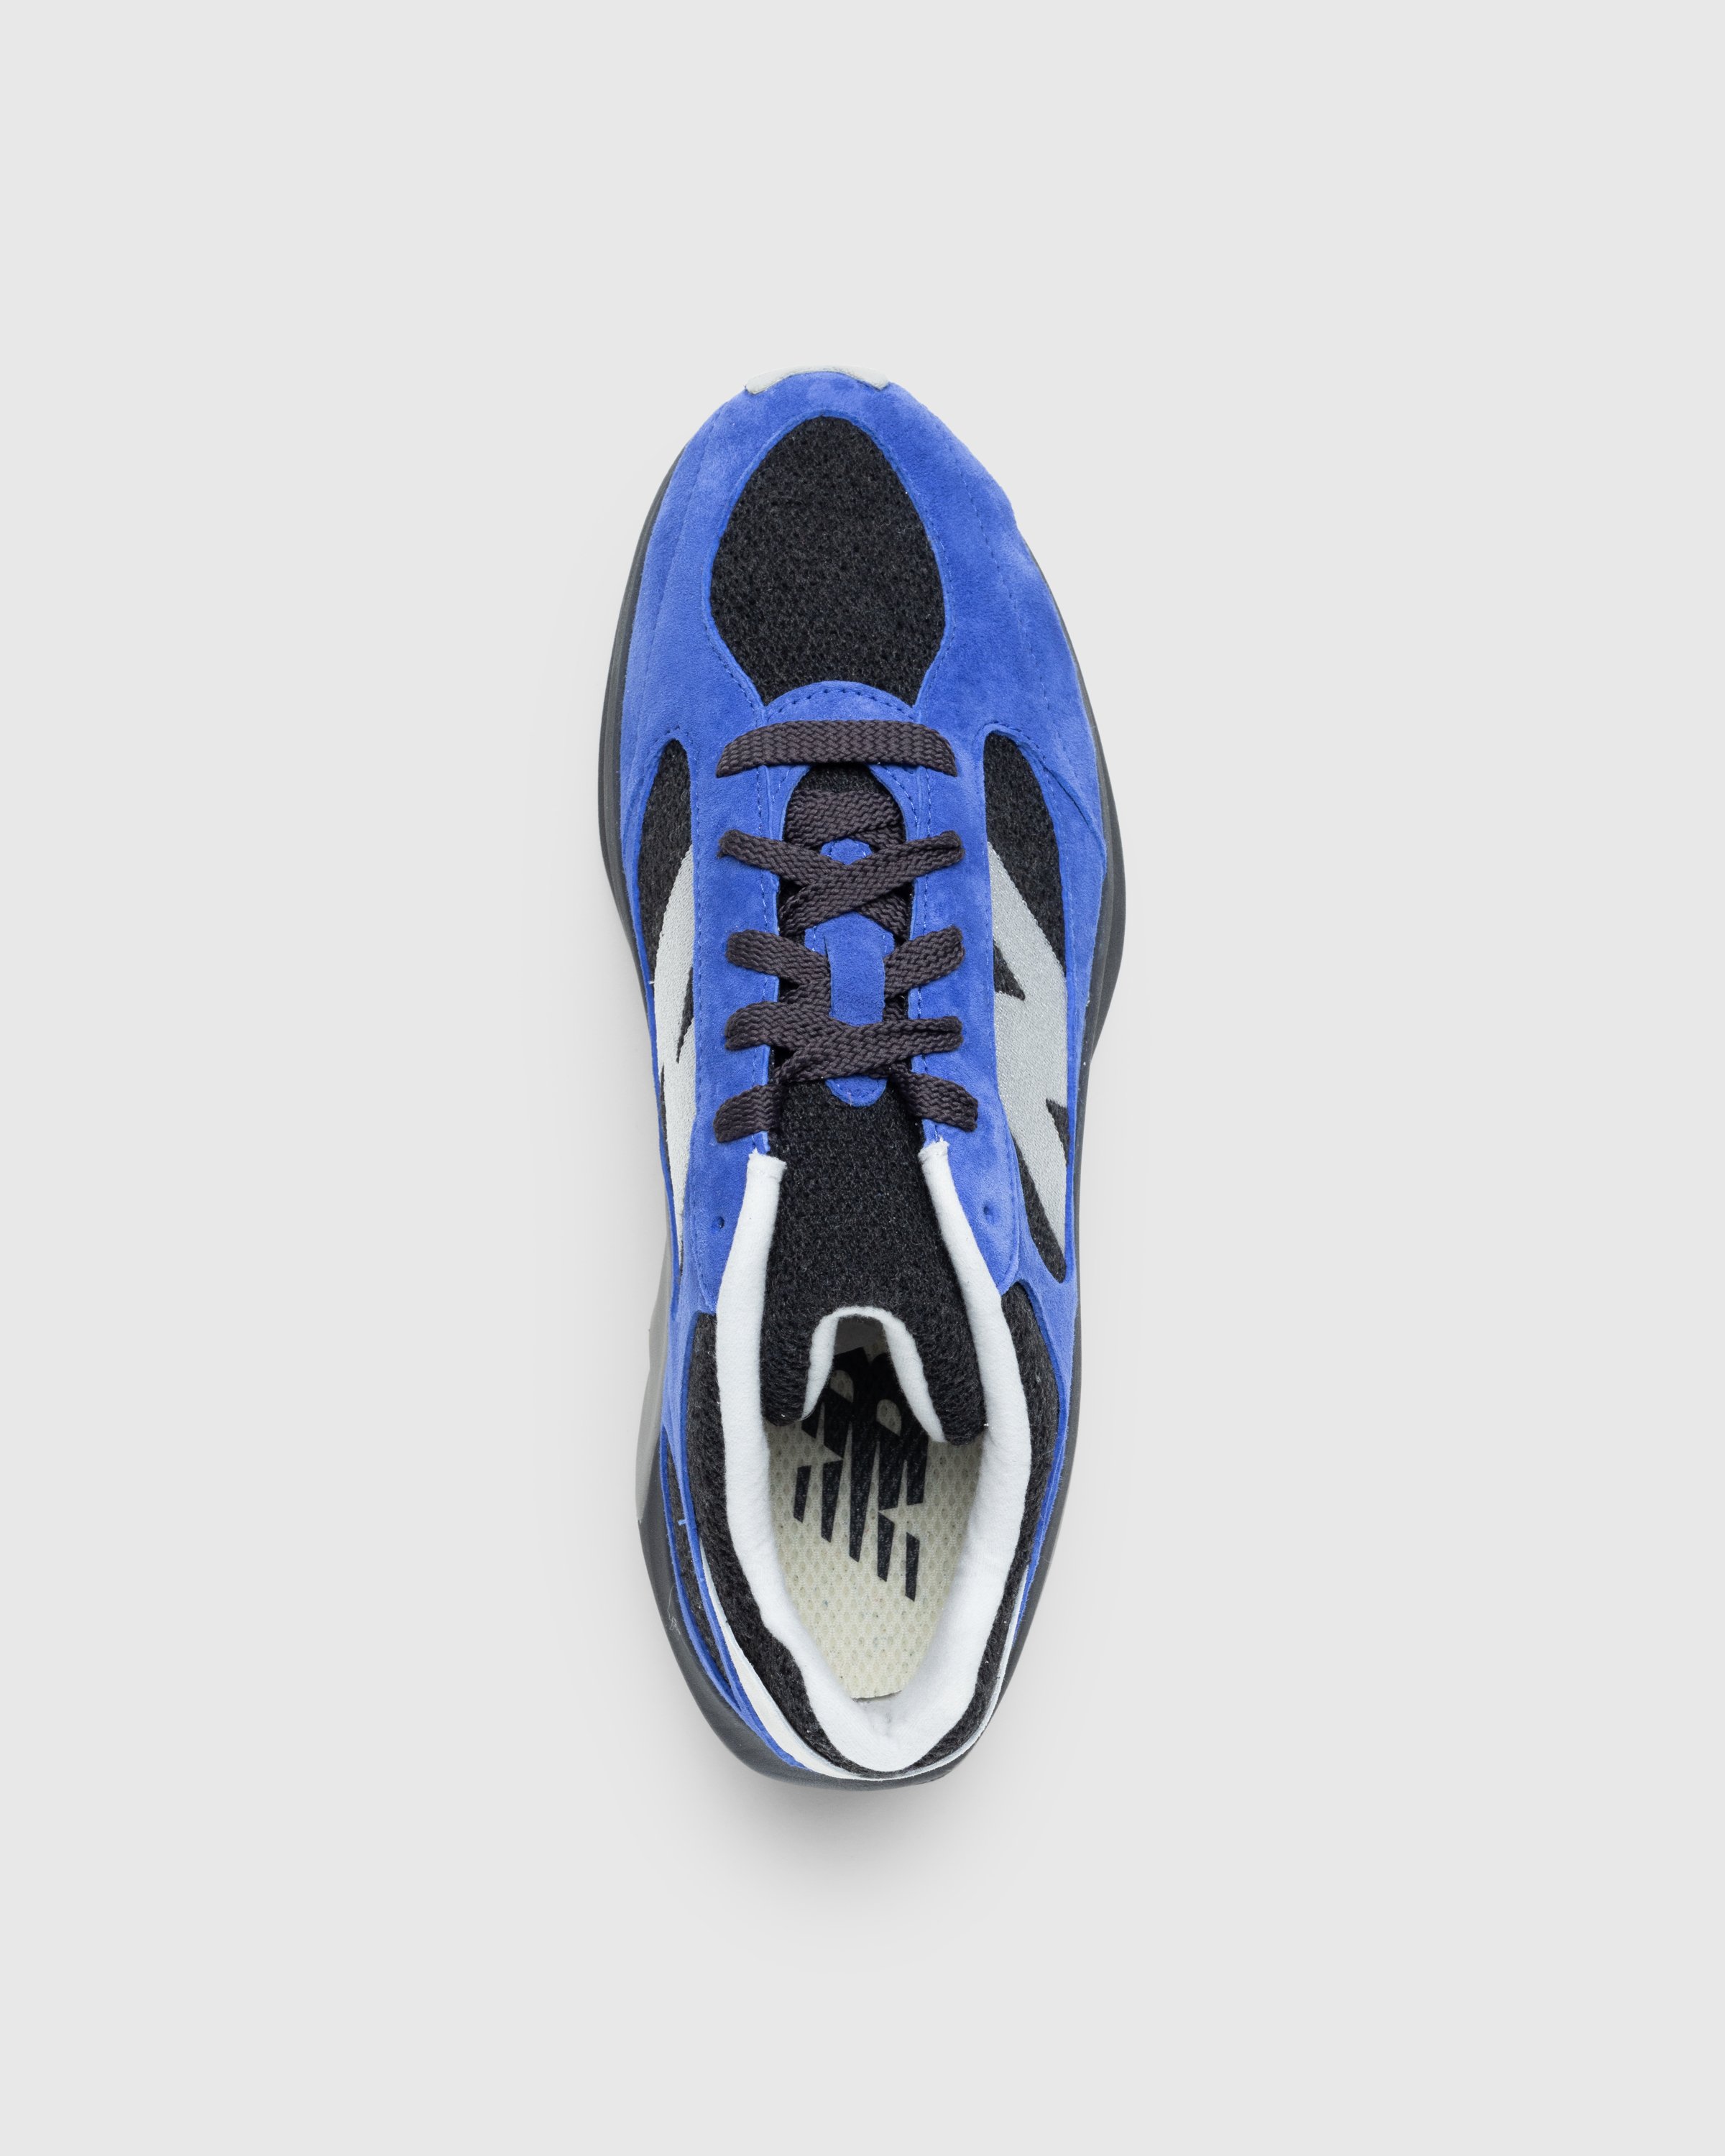 New Balance - WRPD Runner Marine Blue/Summer Fog - Footwear - Blue - Image 5